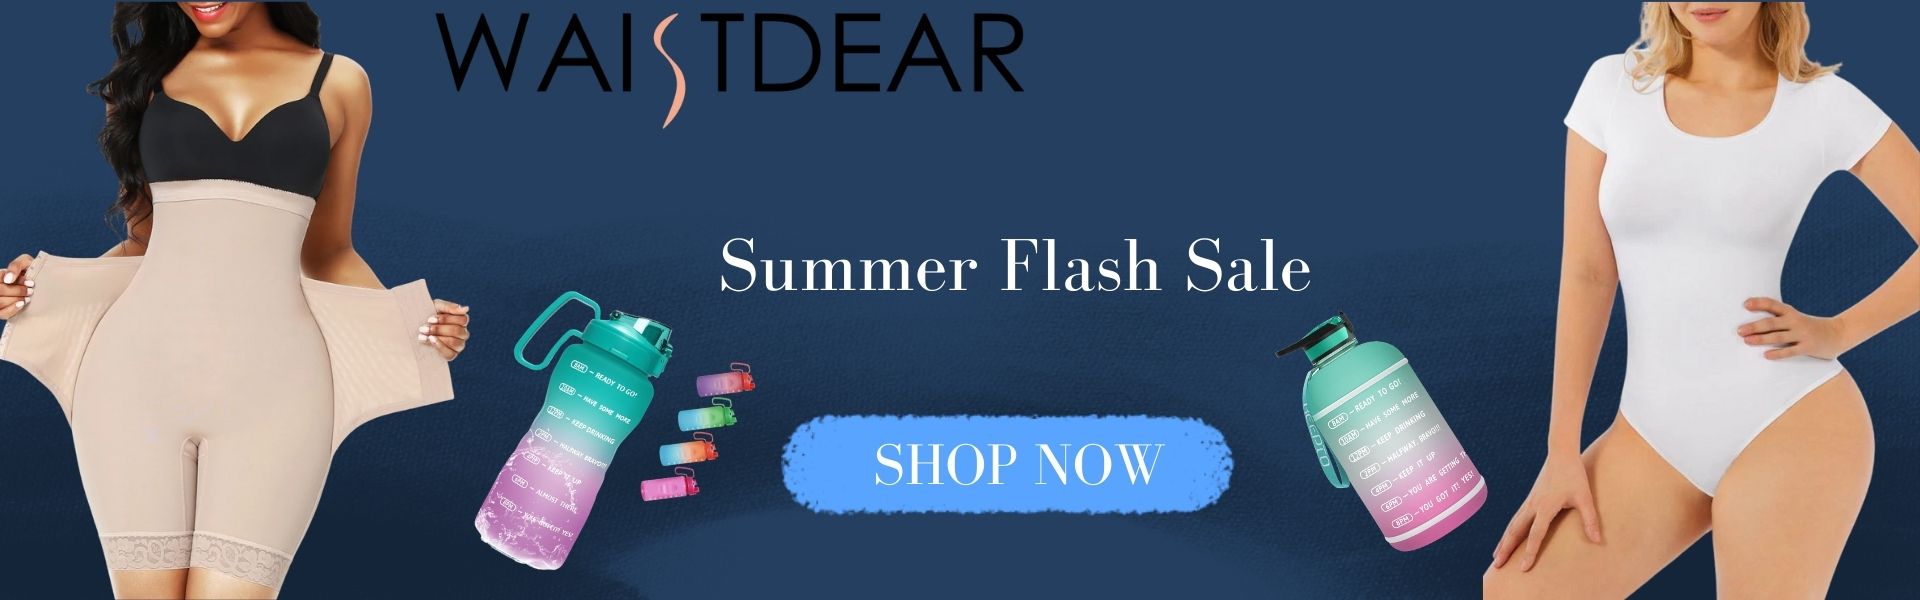 Hurry! Waistdear Flash Sale on Summer Styles Ends This Week